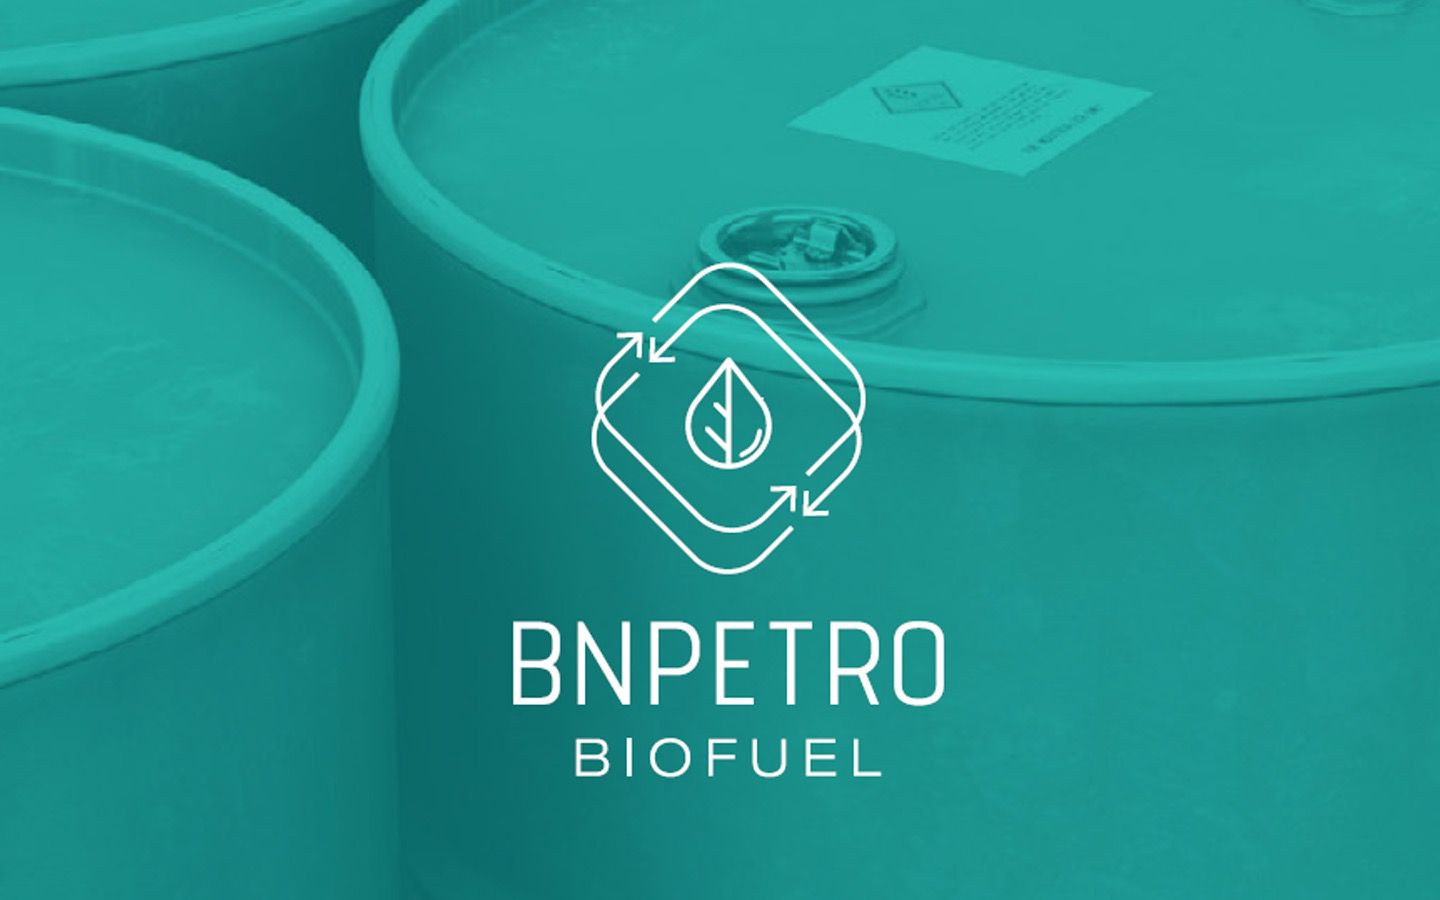 Bnpetro Biofuel